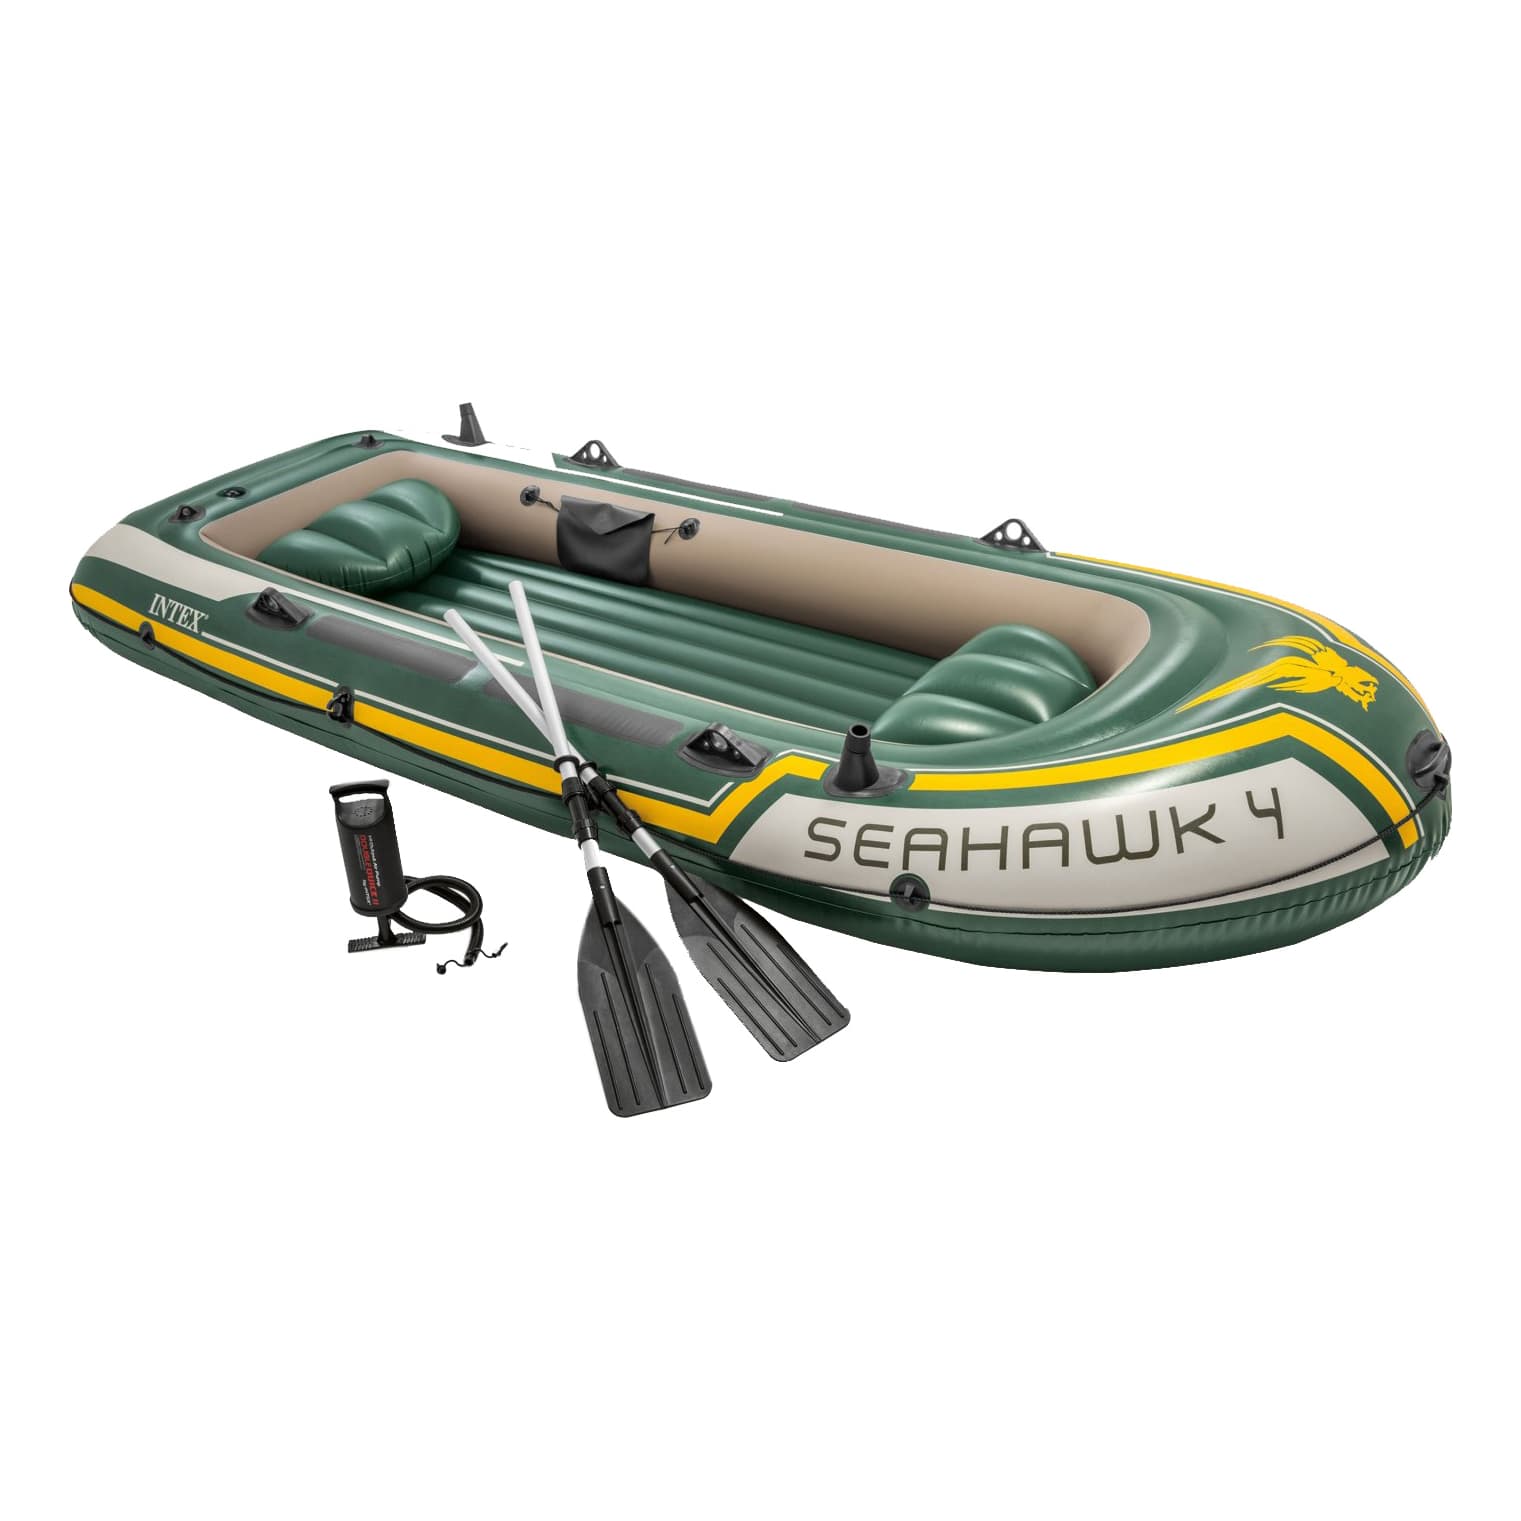 Intex Seahawk 4 Inflatable Boat Kit